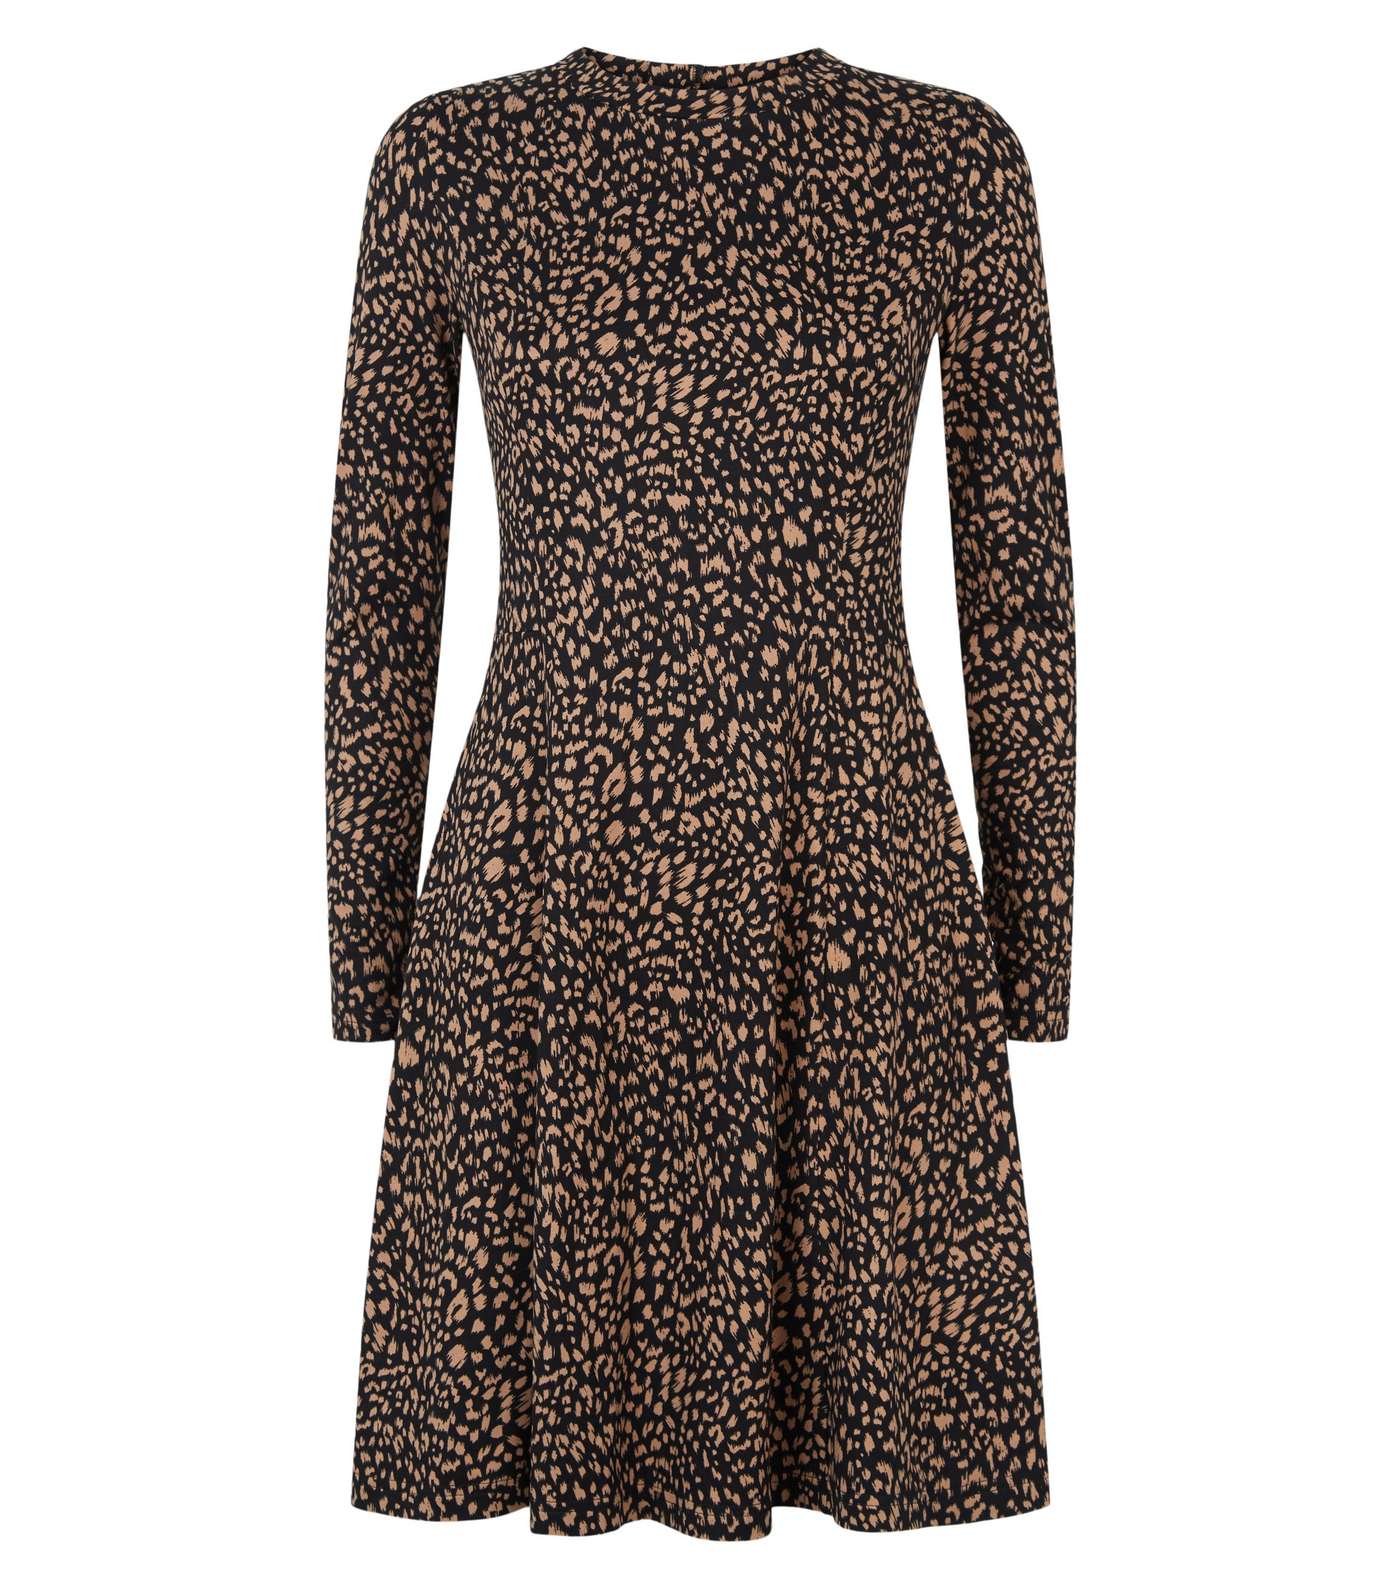 Black Leopard Print Long Sleeve Dress Image 4